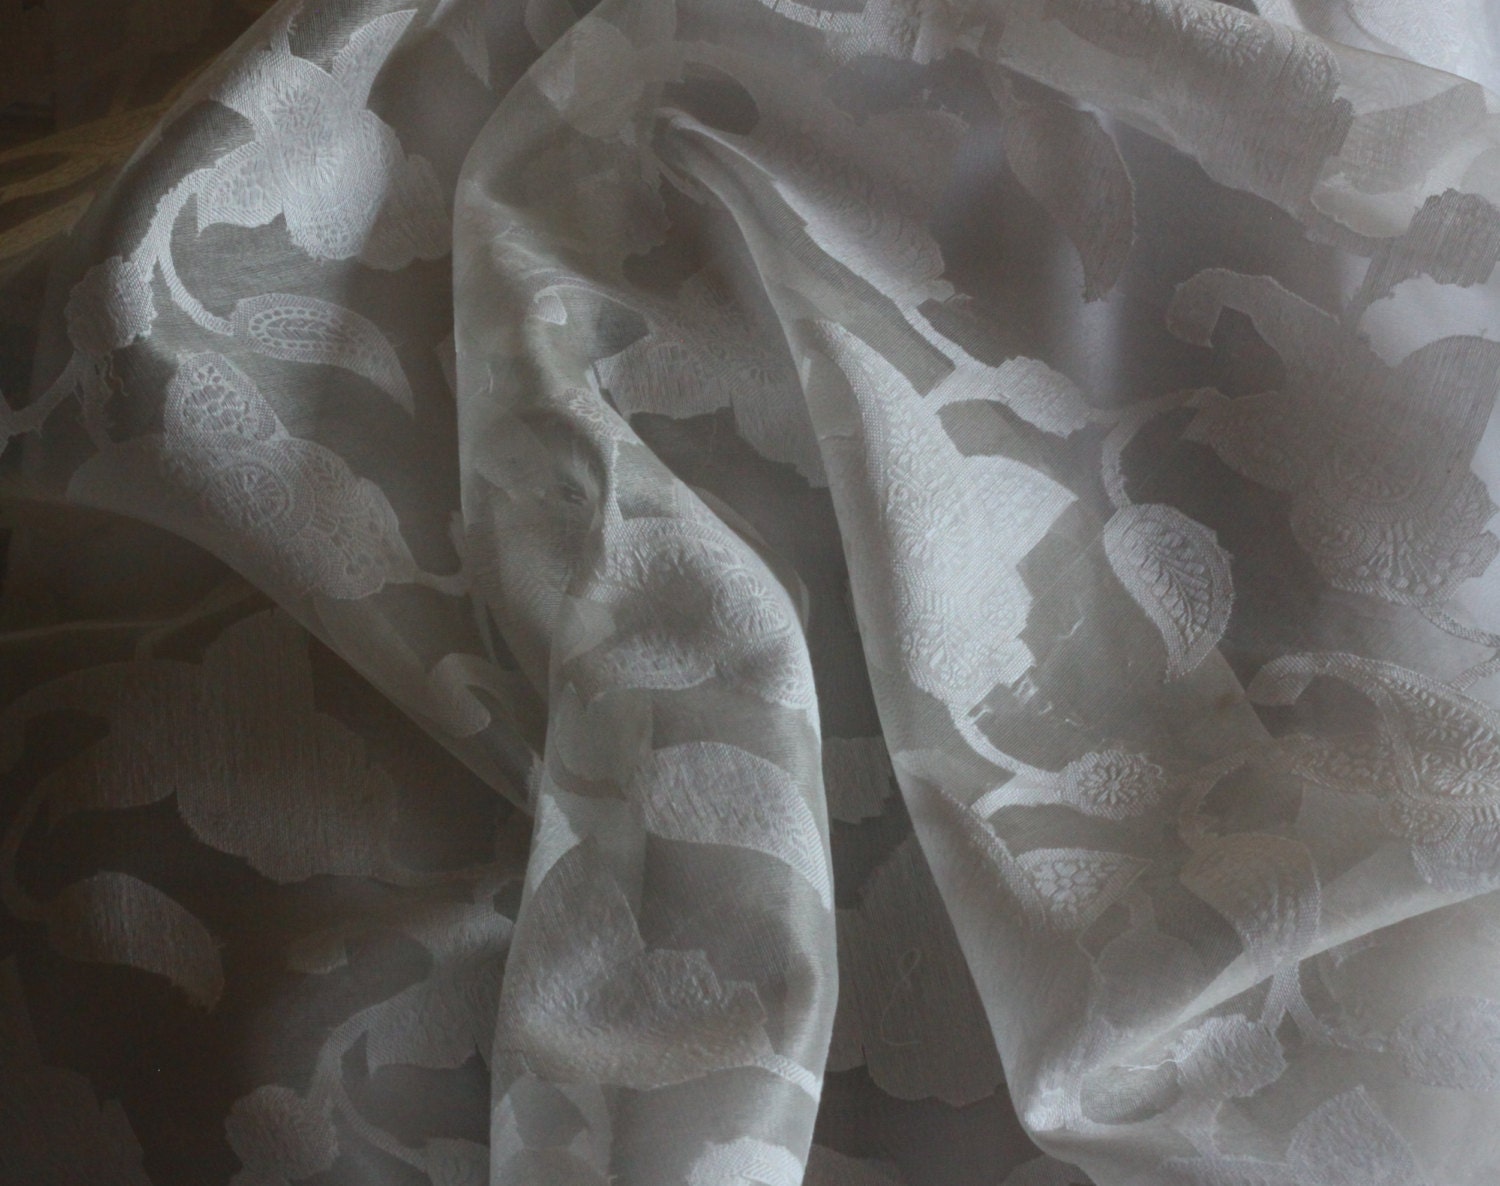 Different fabrics. Organza, chiffon, silk, jacquard are spread out